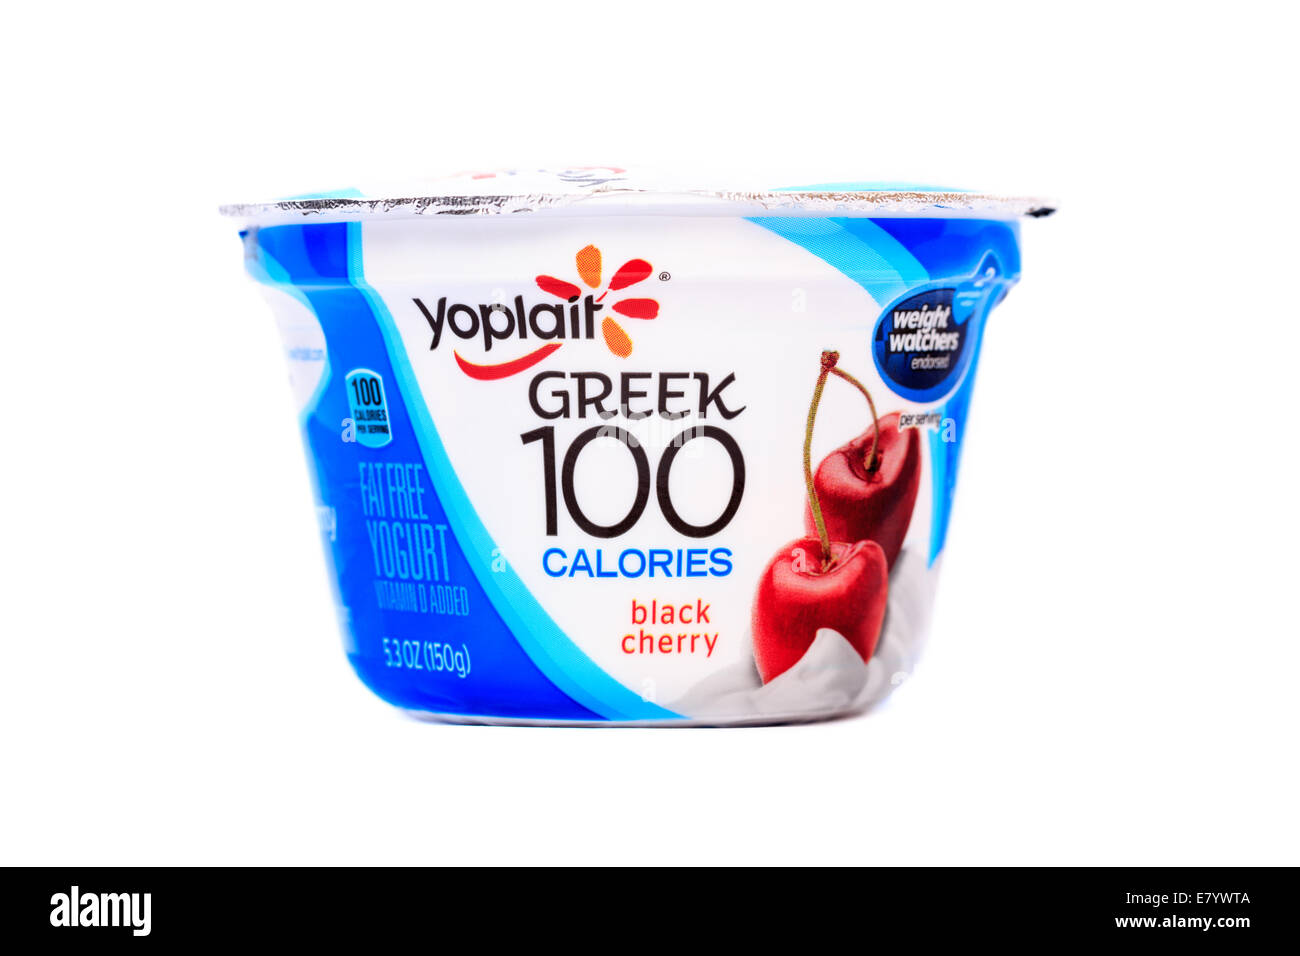 Yoplait Greek Black Cherry Yogurt Stock Photo